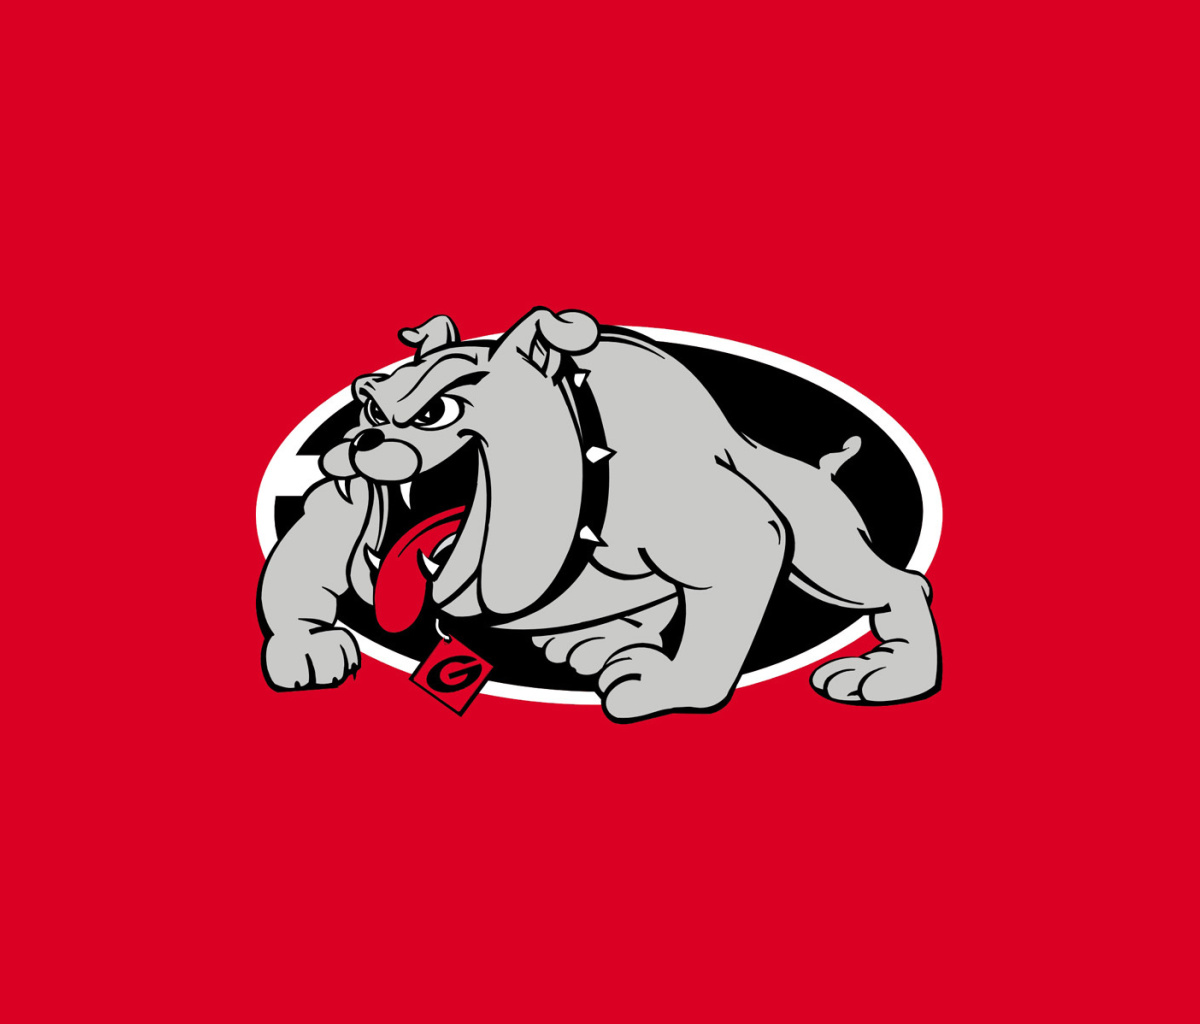 Das Georgia Bulldogs University Team Wallpaper 1200x1024